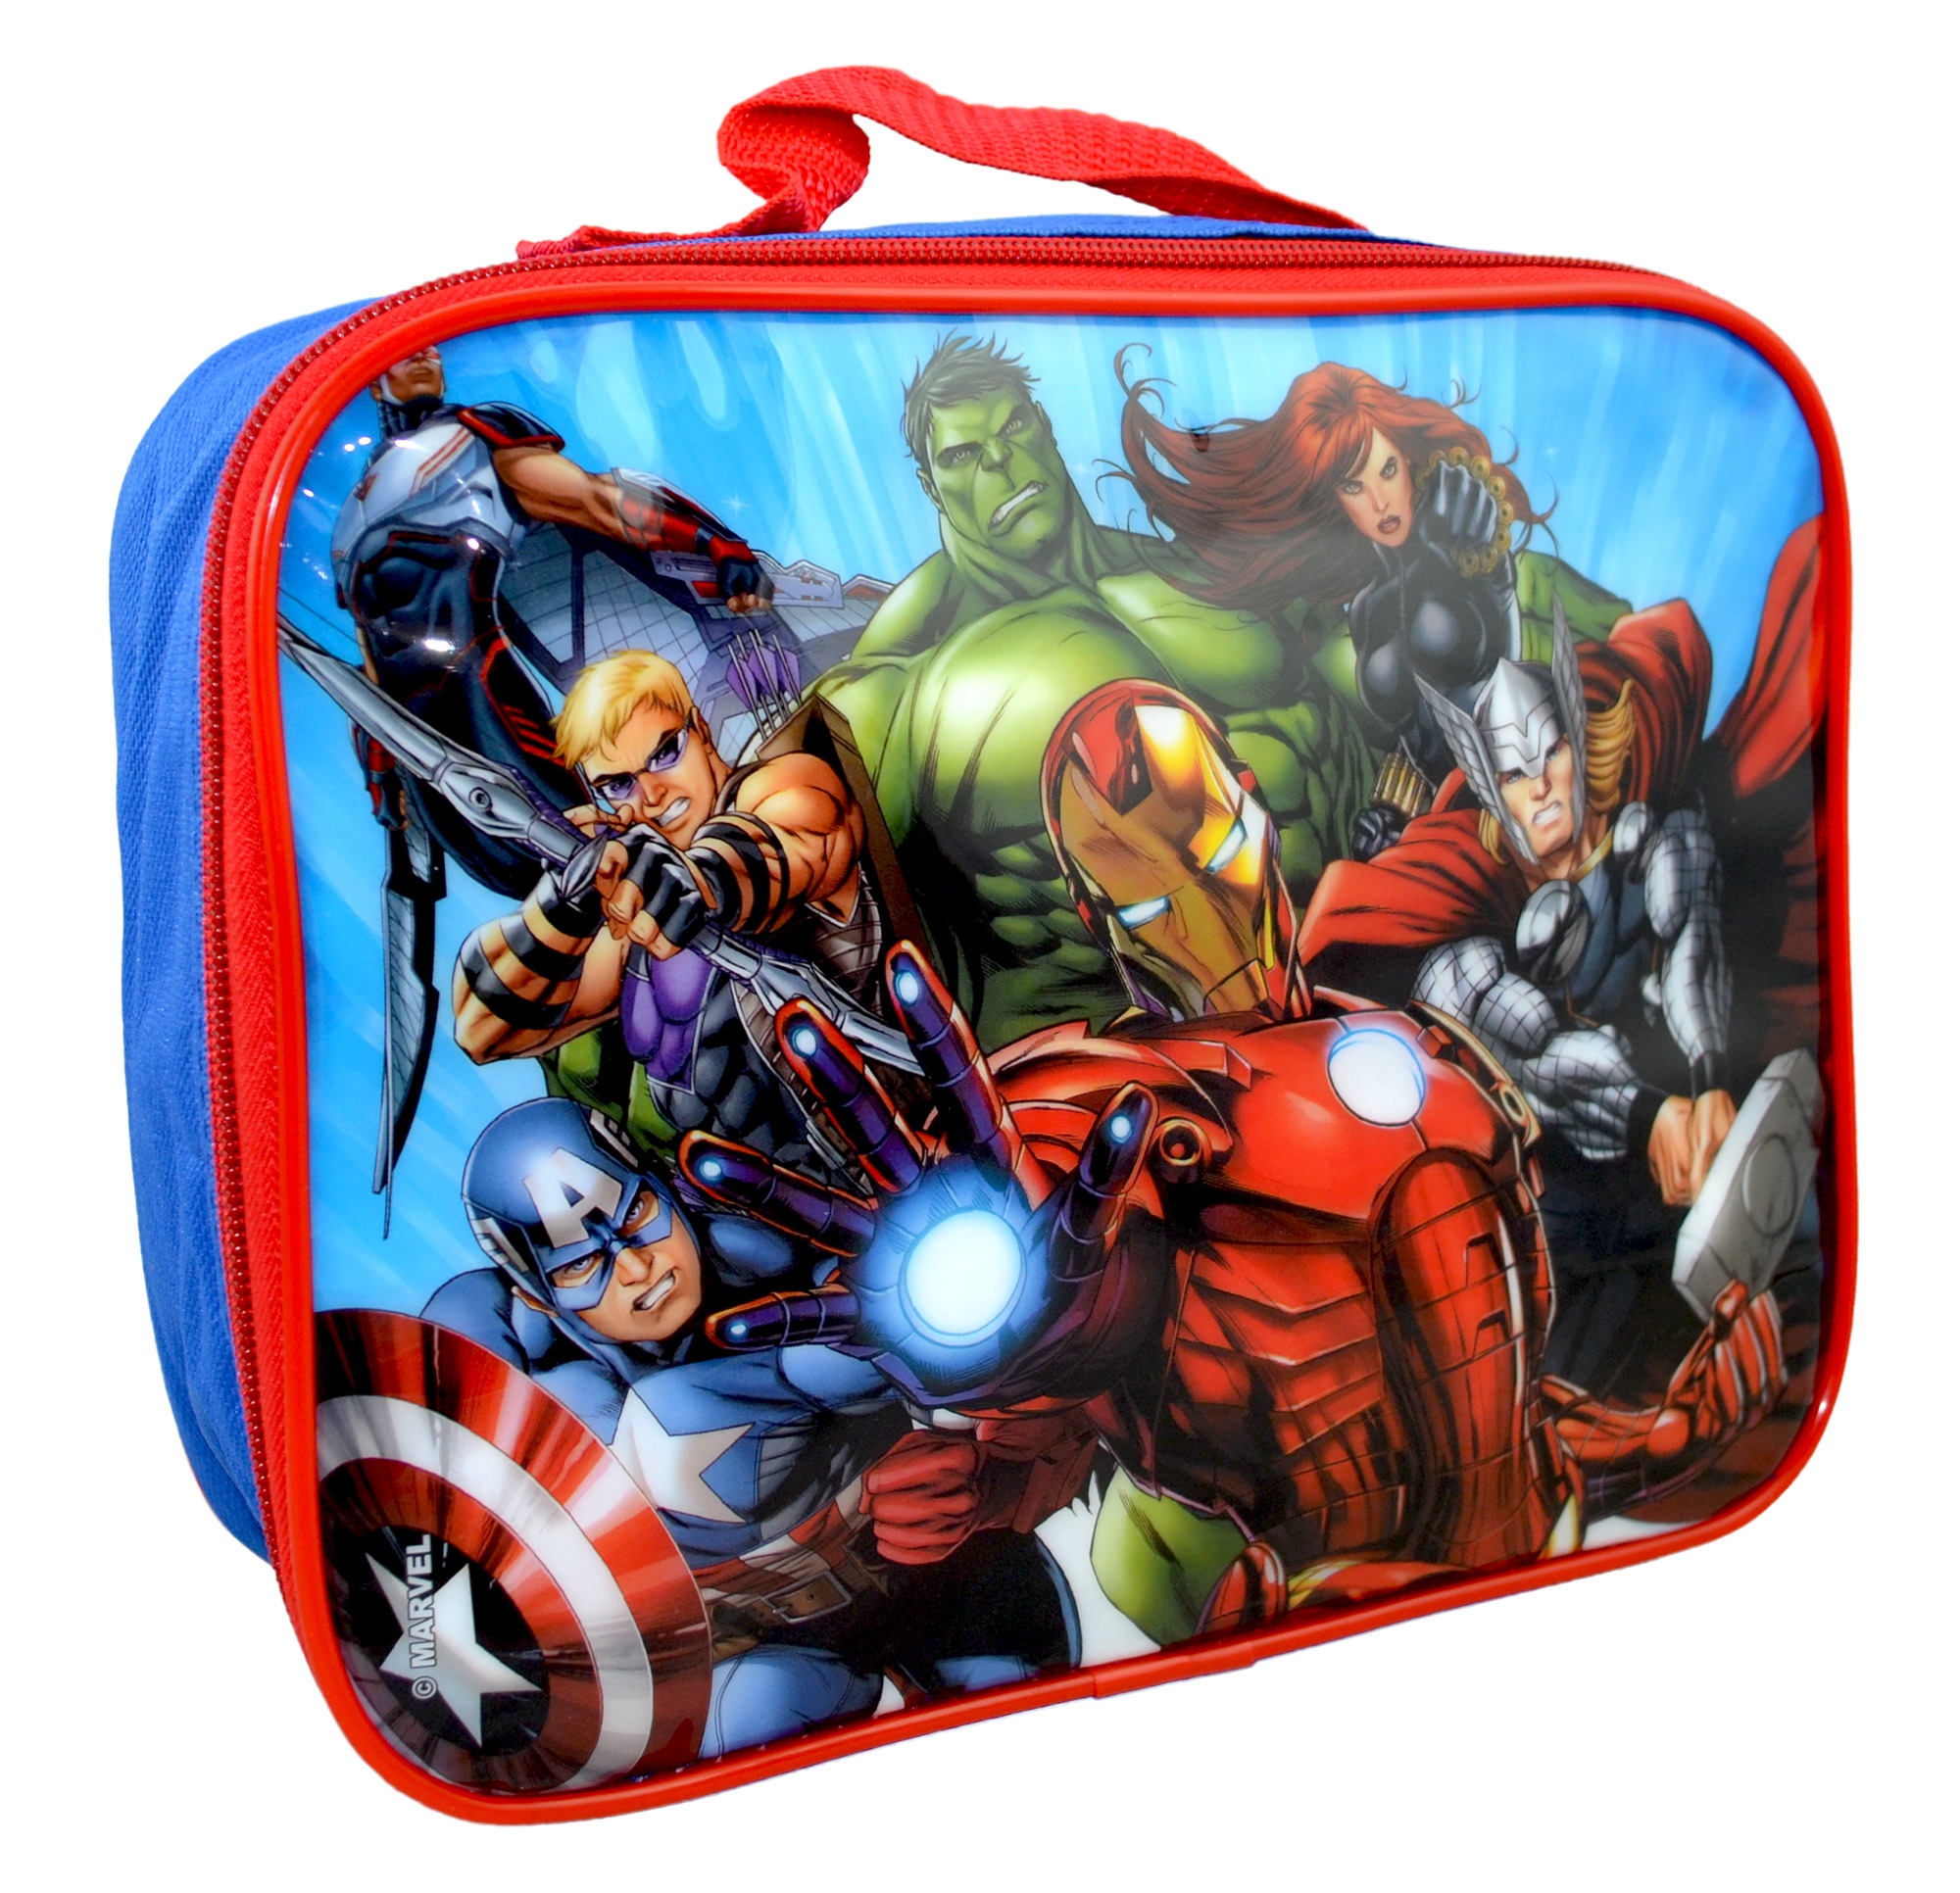 Avengers 'Force' School Rectangle Lunch Bag